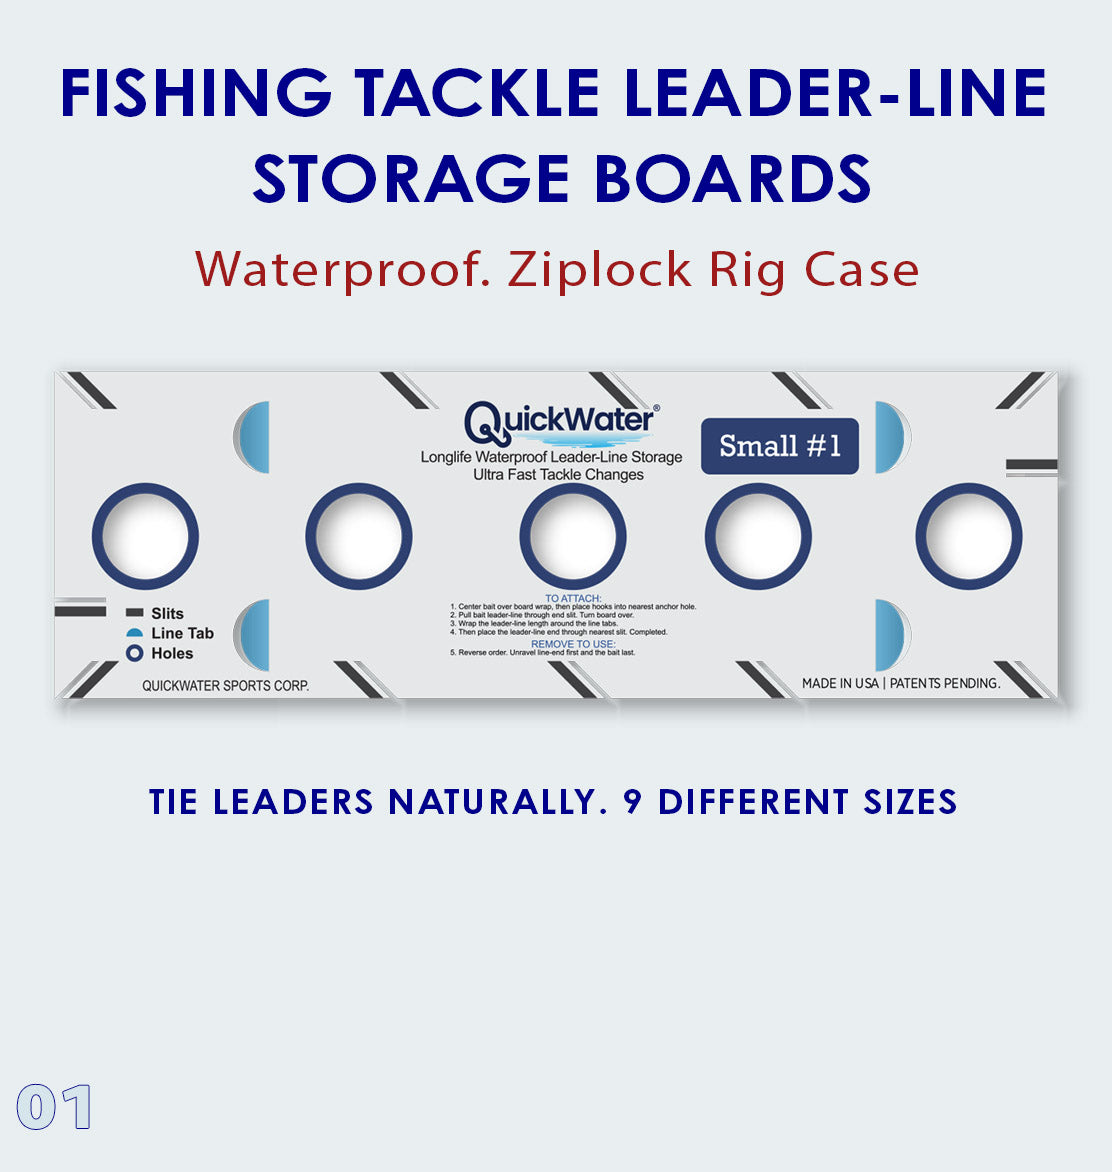 Slide 1: Fishing Tackle Leader-line Storage Boards • Waterproof, Ziplock Rig Case • Tie Leaders Naturally, 9 Different Sizes